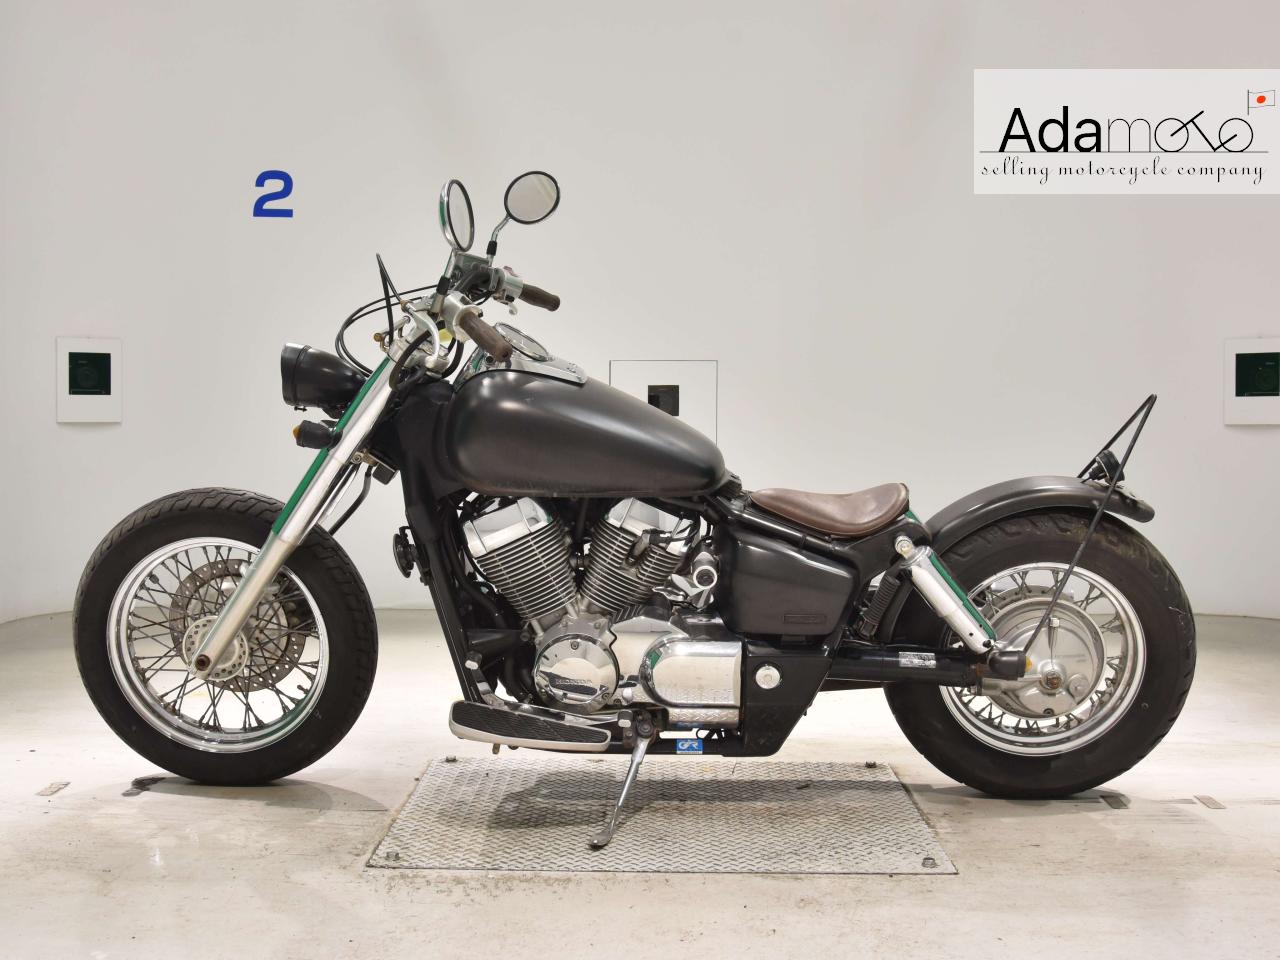 Honda SHADOW400 CLASSIC - Adamoto - Motorcycles from Japan